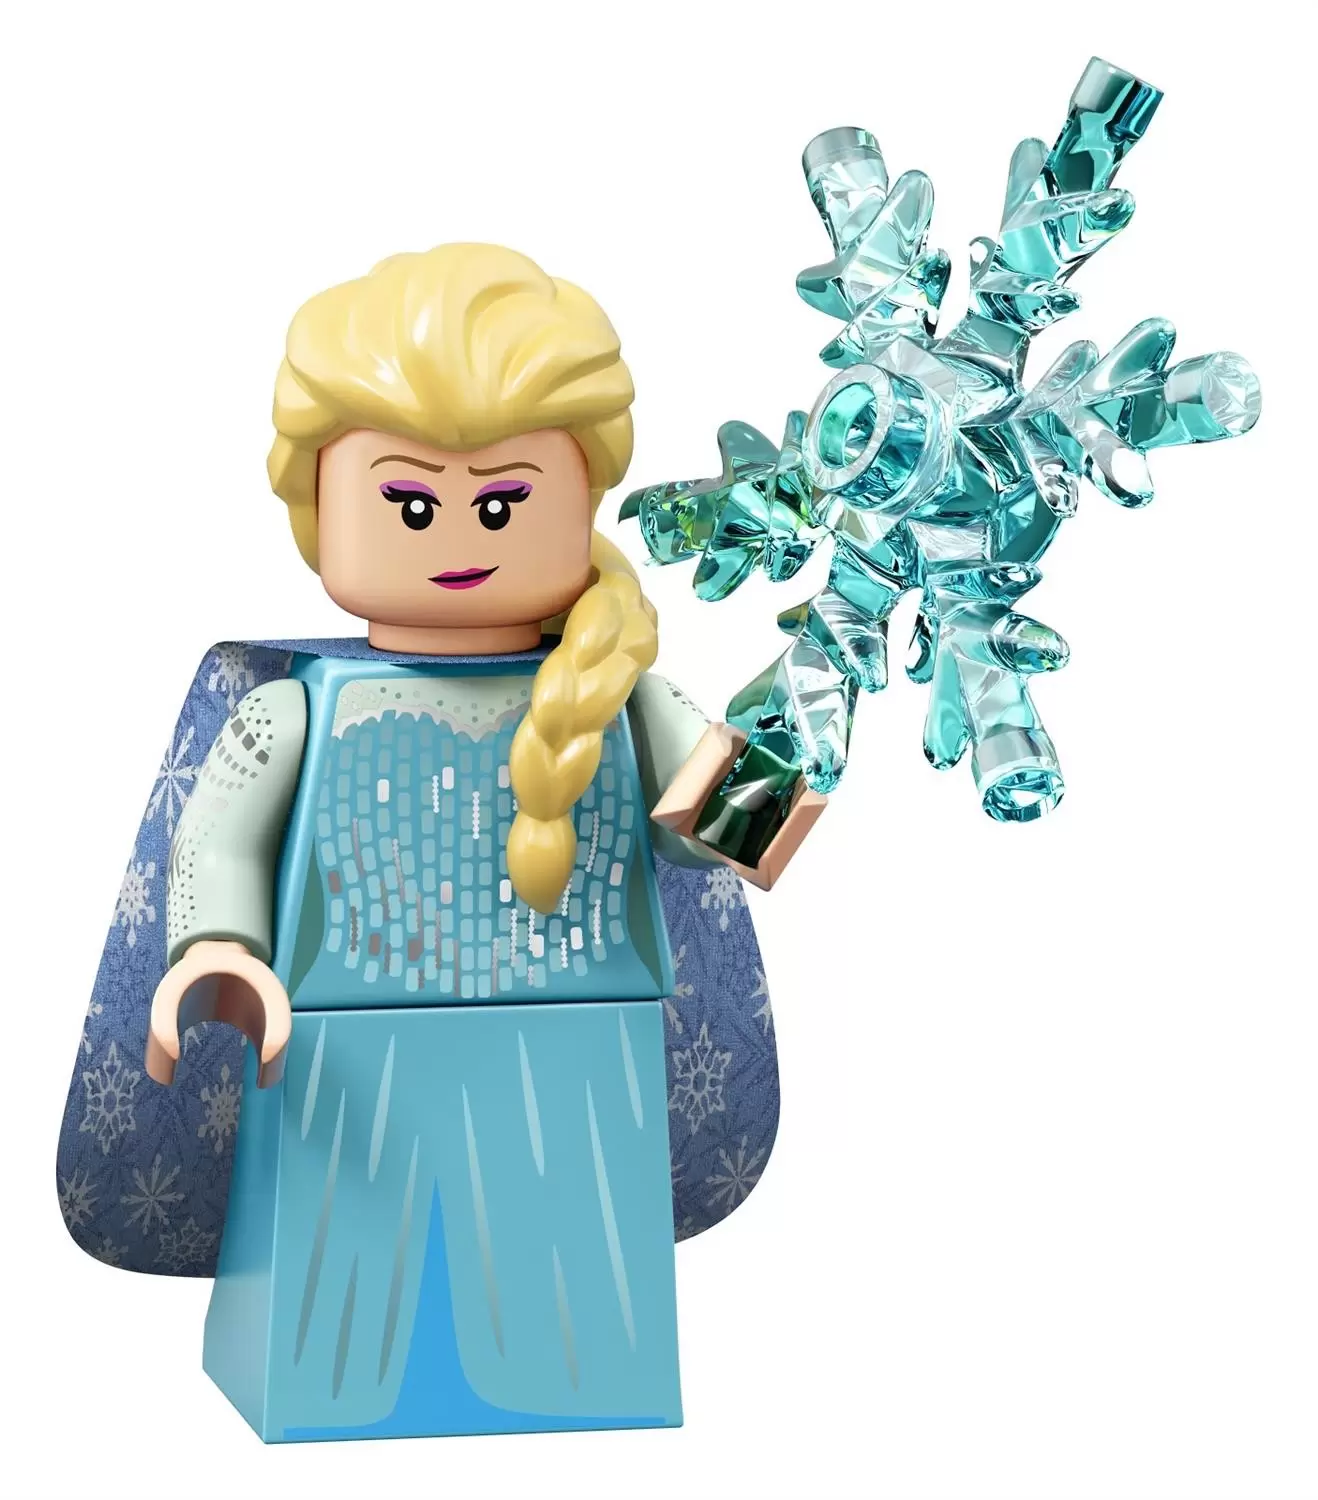 LEGO Minifigures Disney Series 2 - Elsa